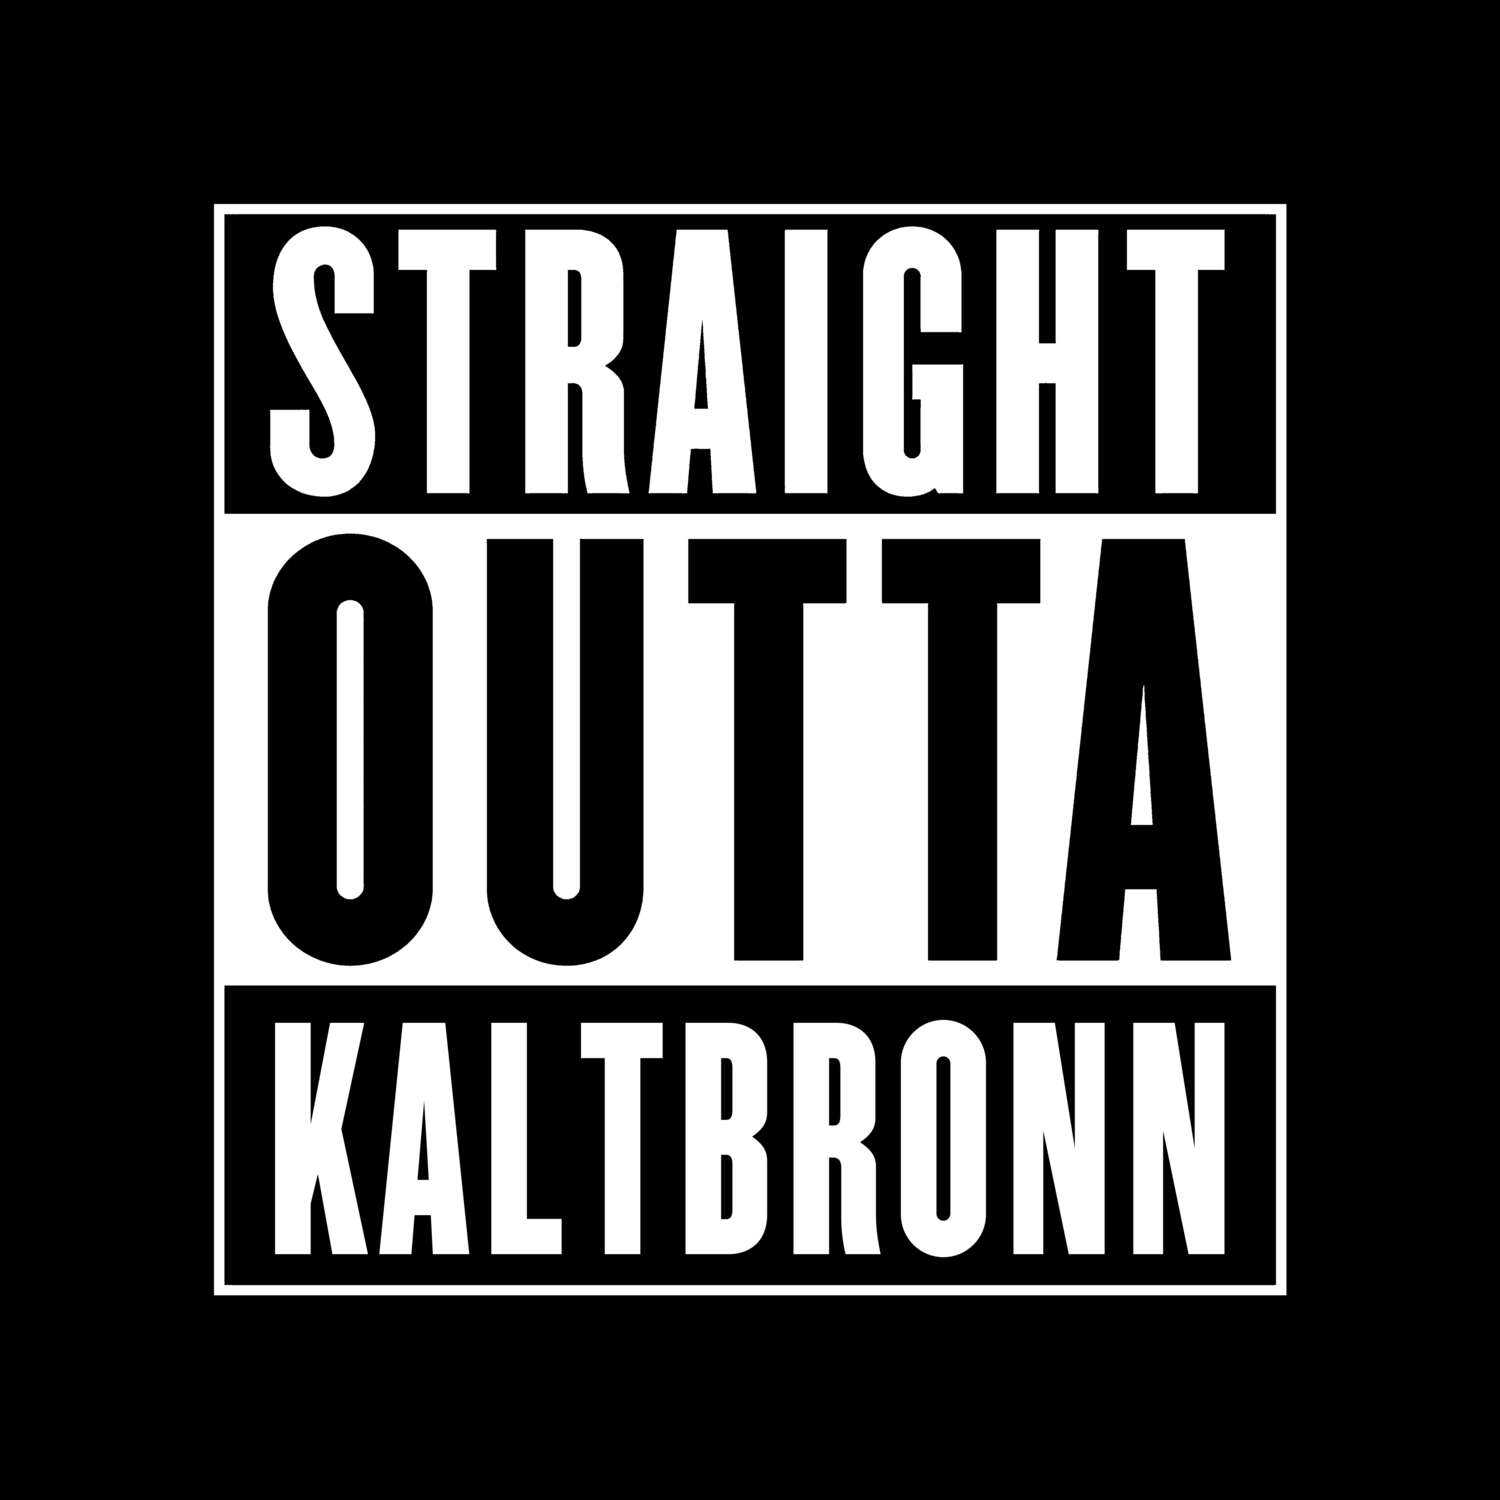 Kaltbronn T-Shirt »Straight Outta«